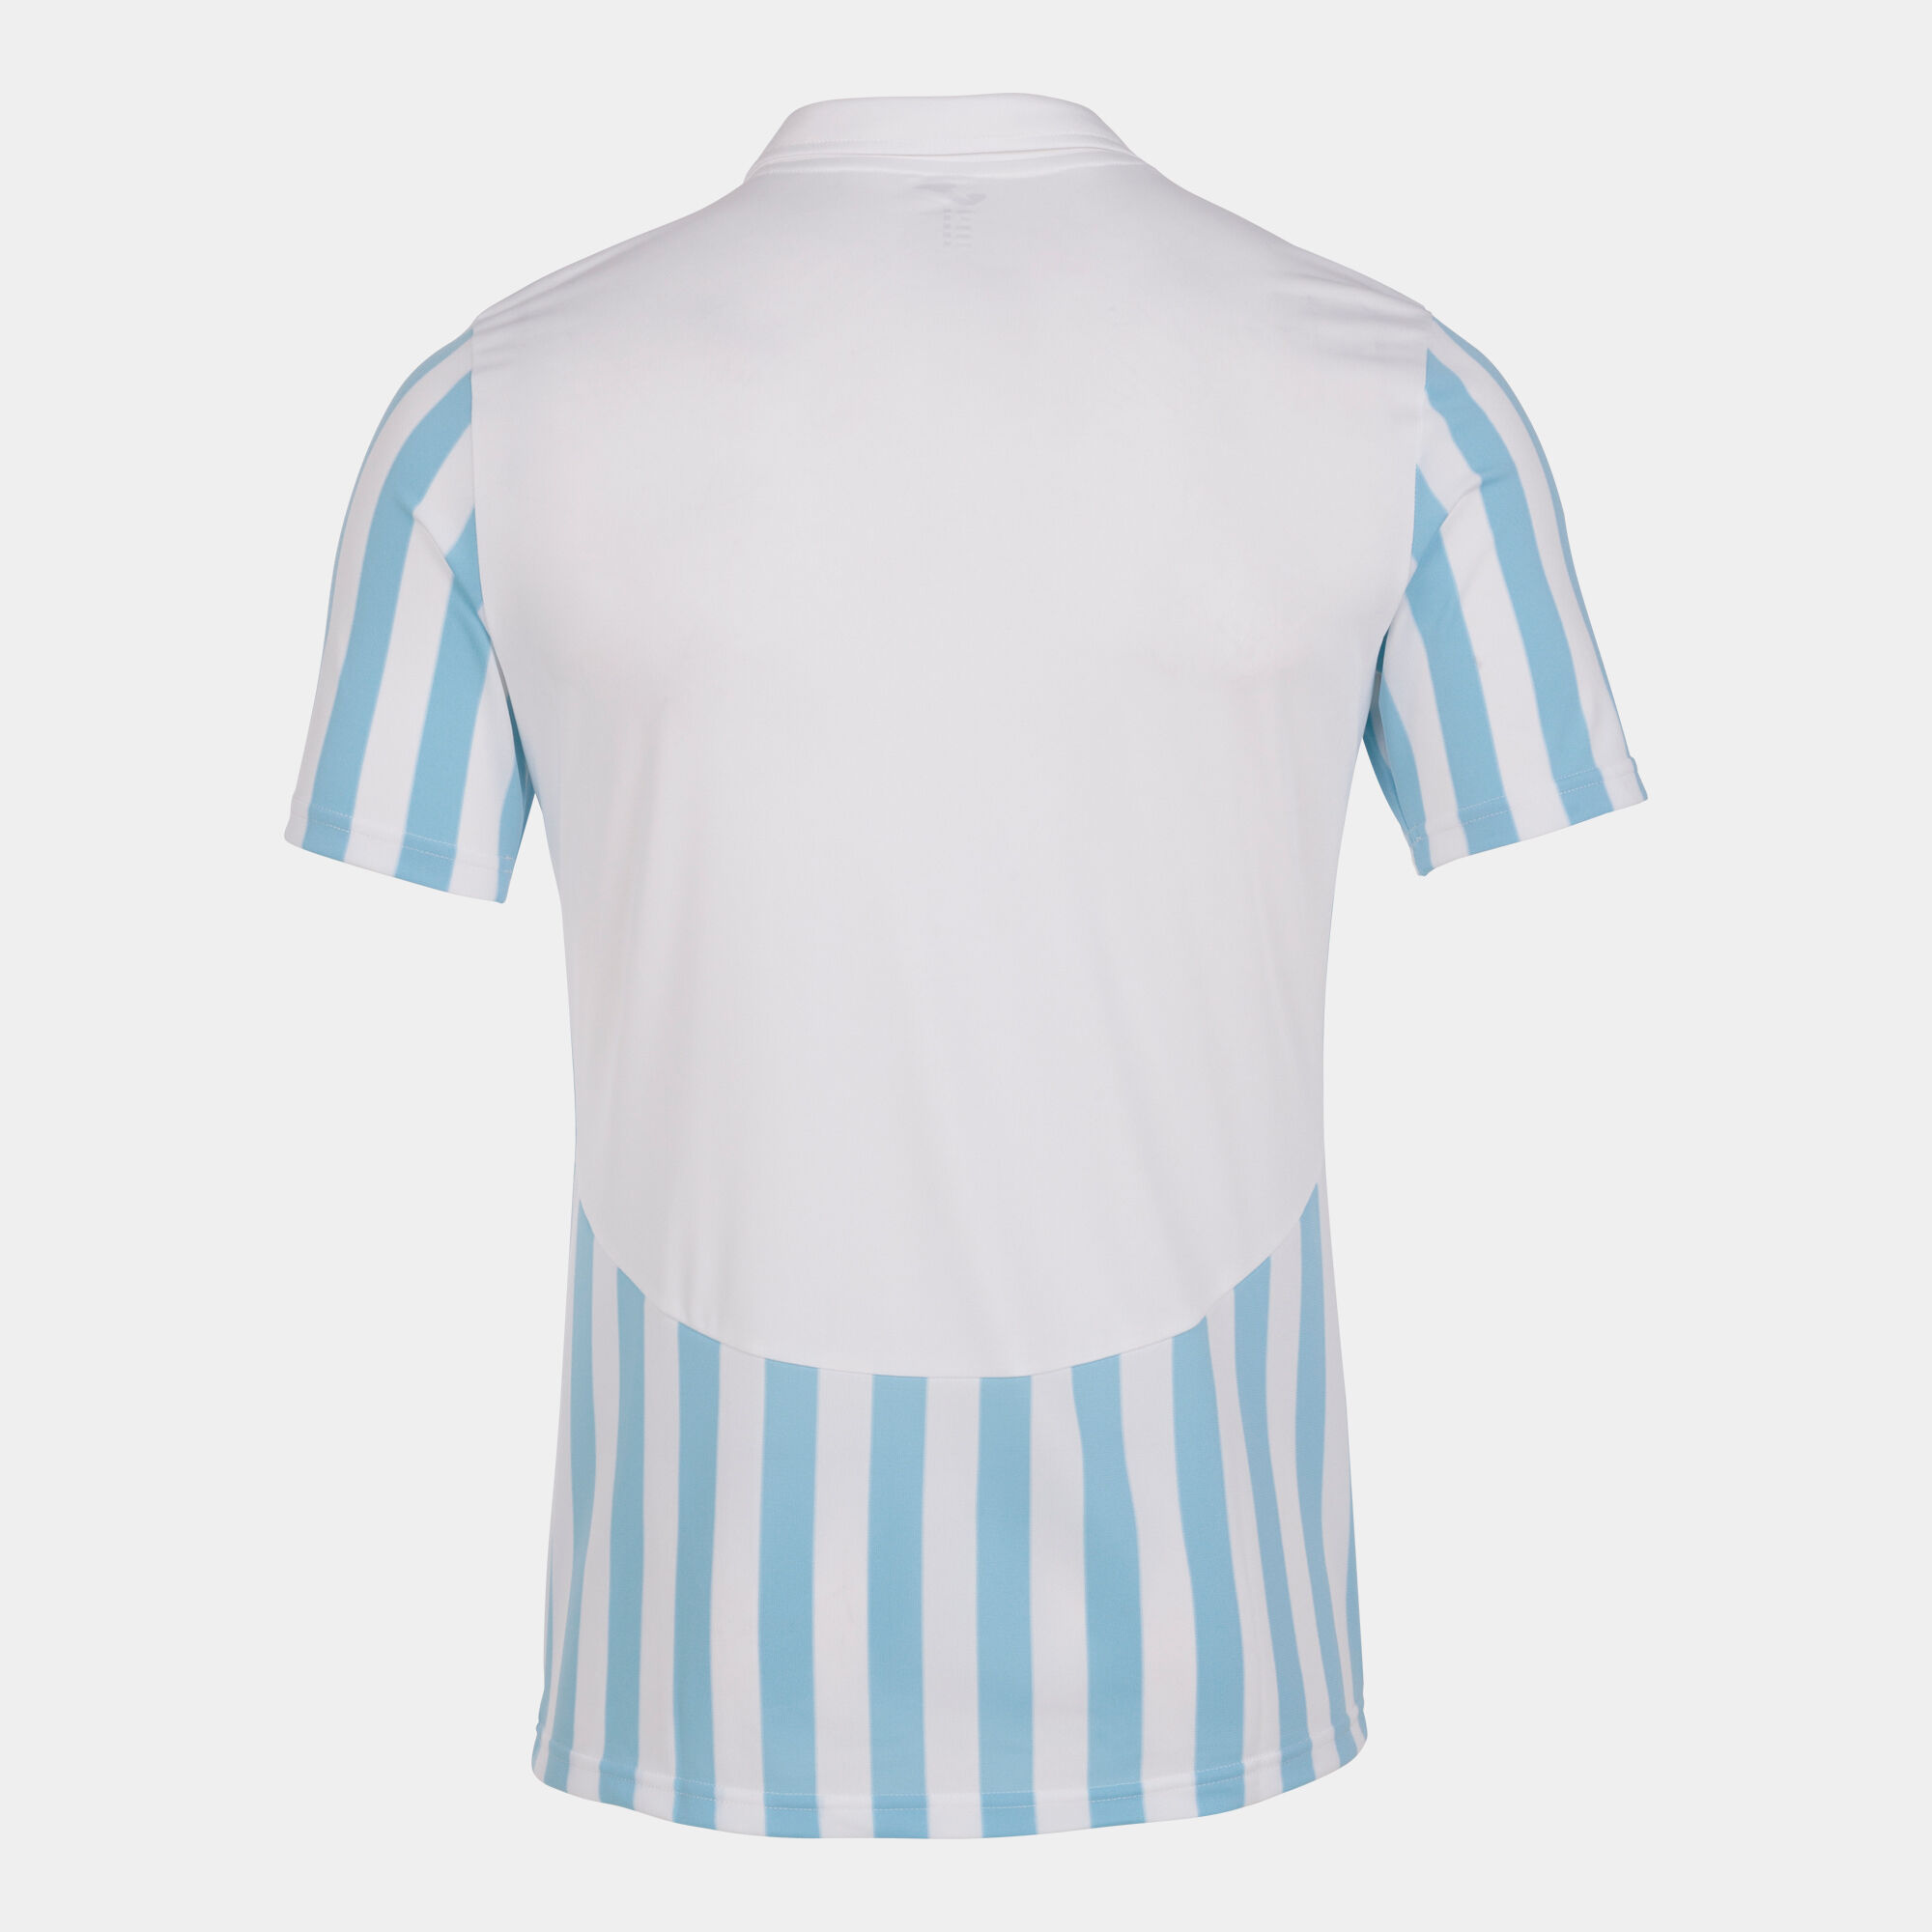 Camiseta manga corta hombre Copa II blanco celeste